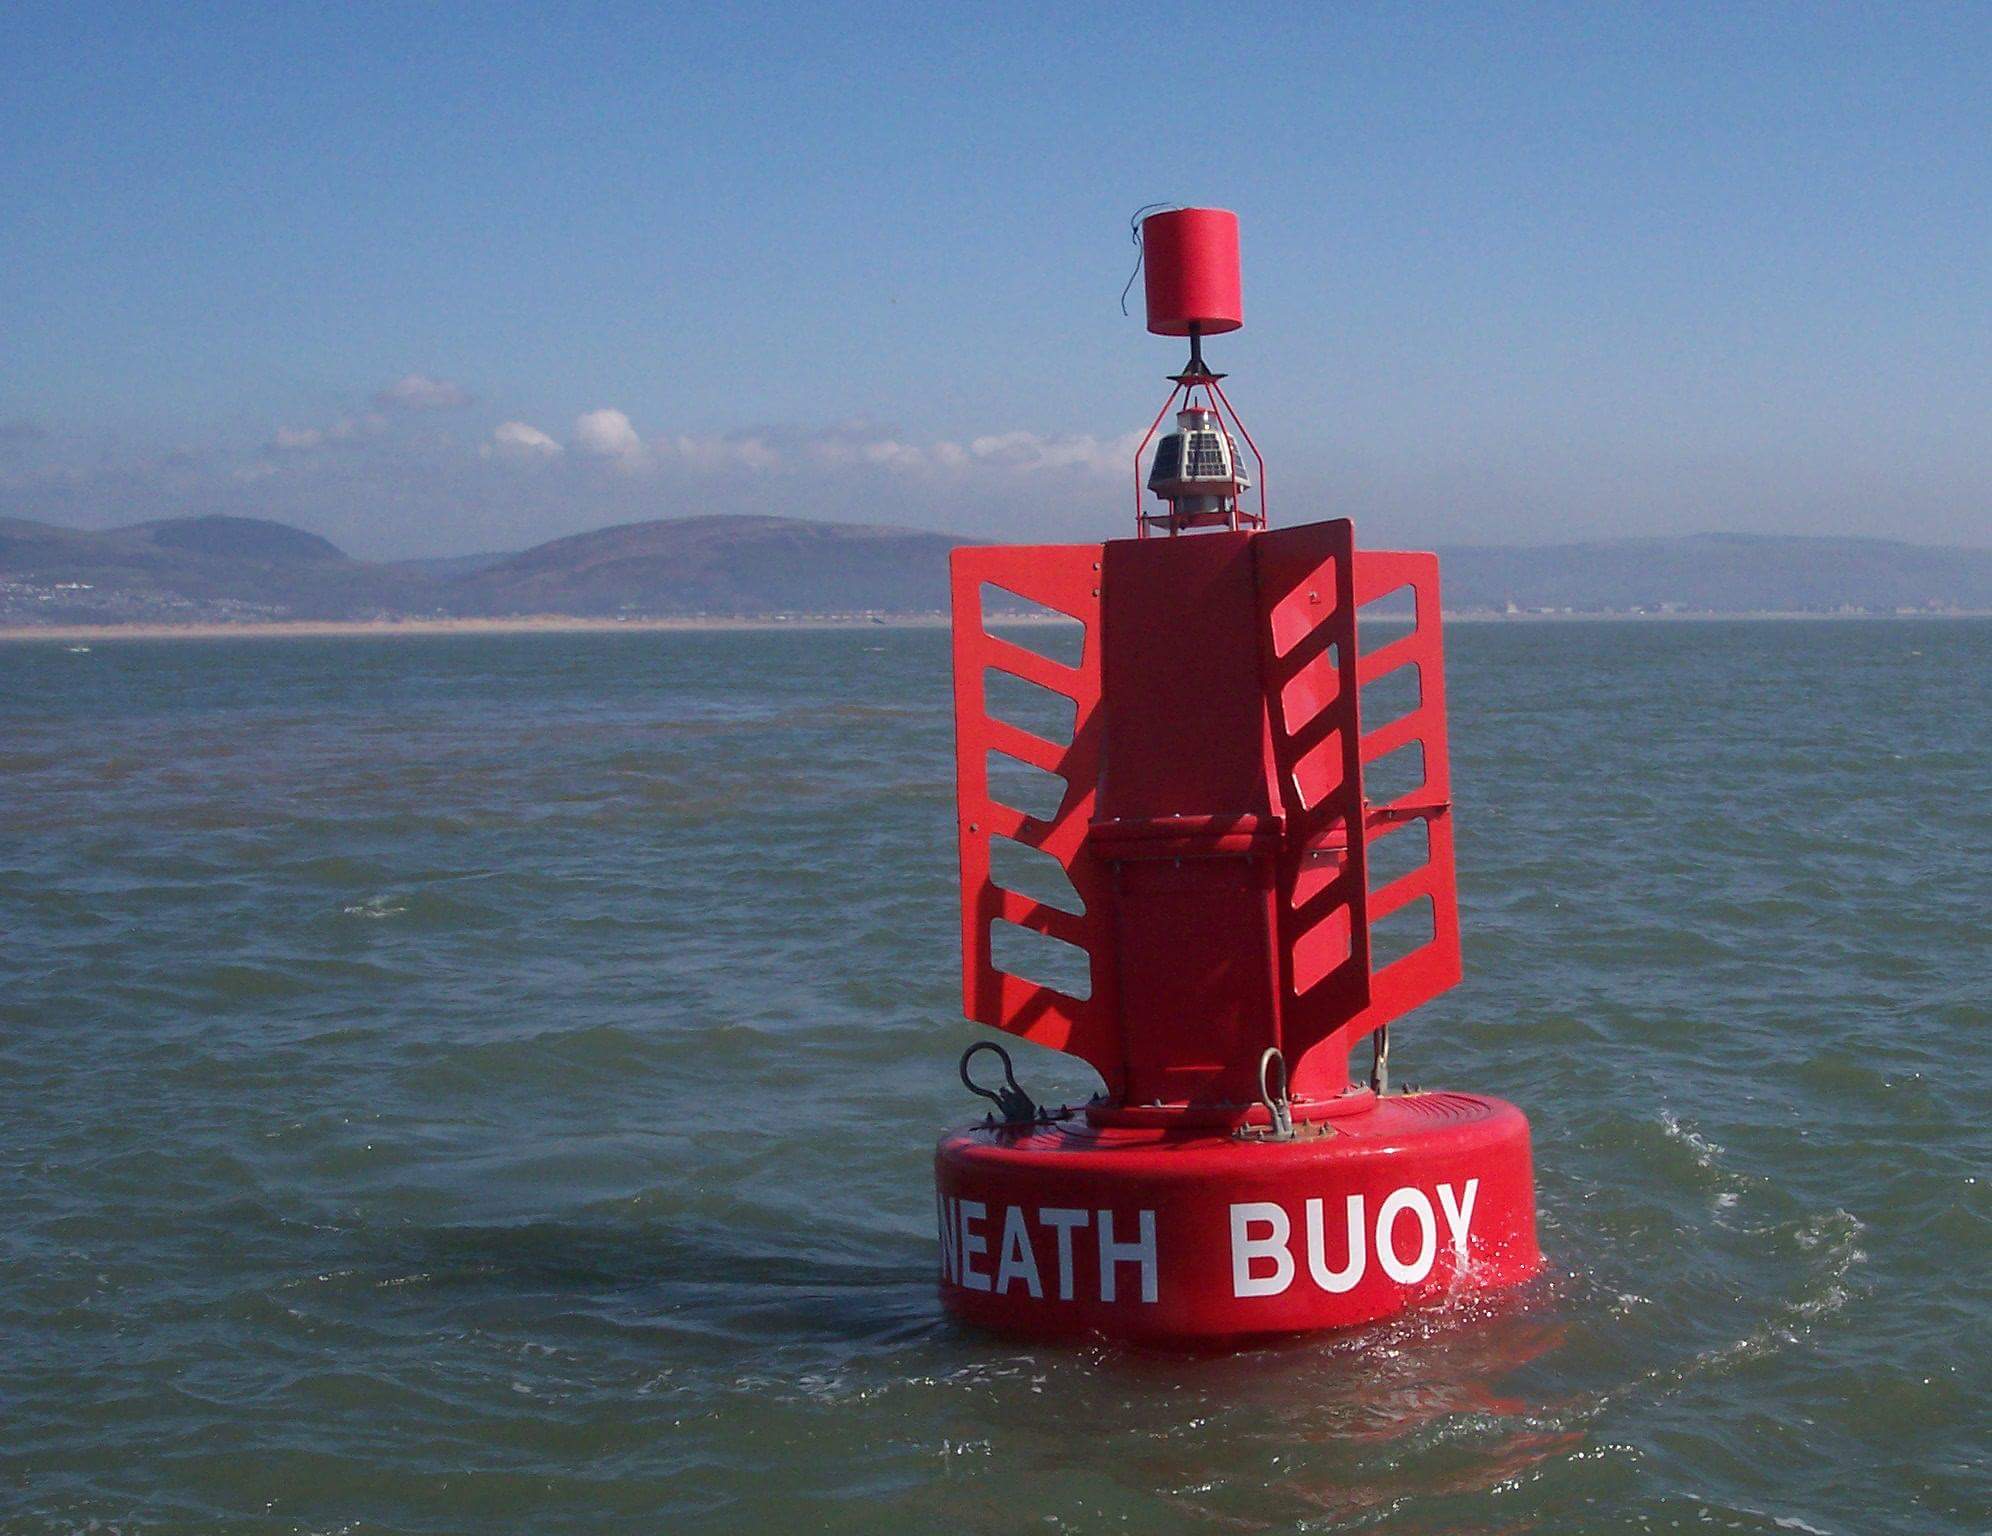 Some buoys - Album on Imgur